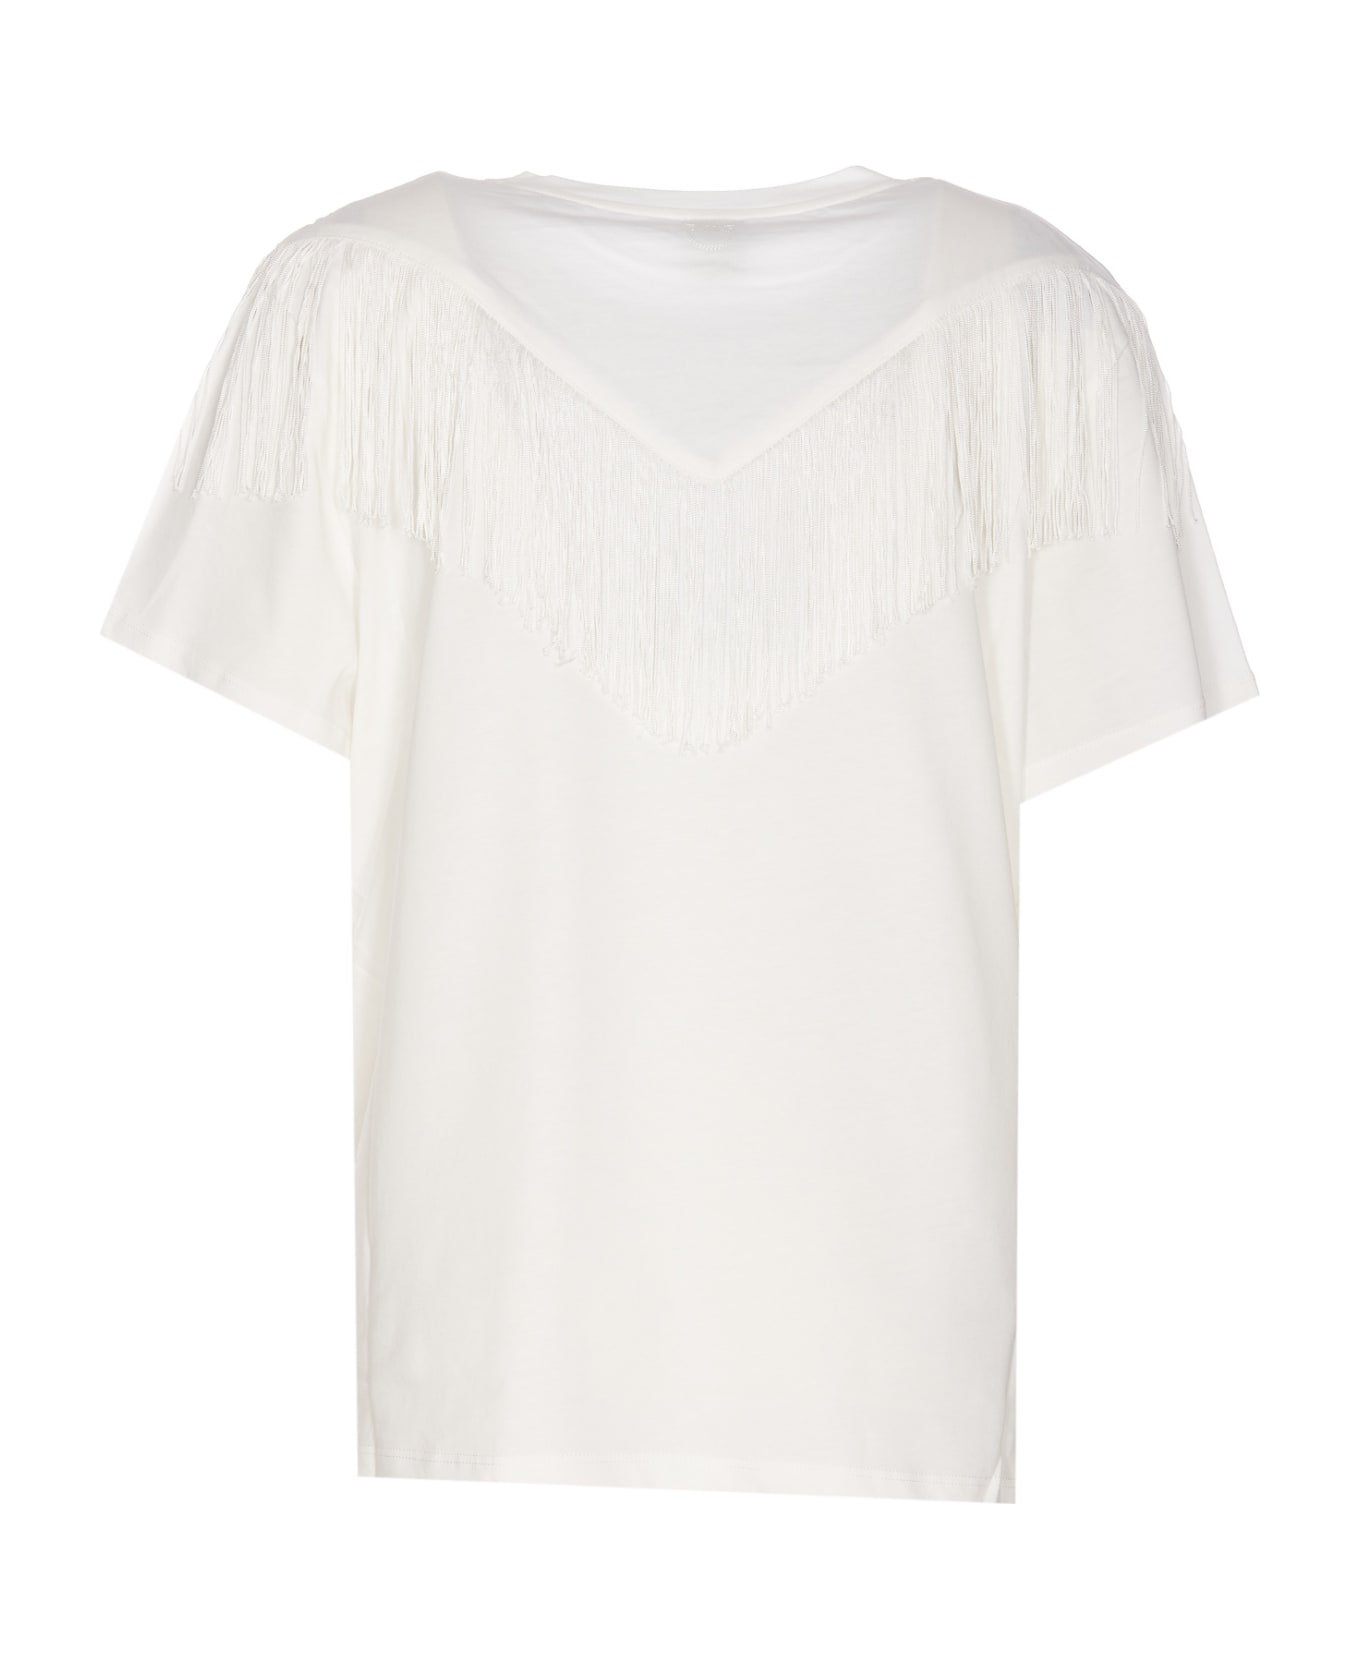 Pinko Fringes T-shirt - White